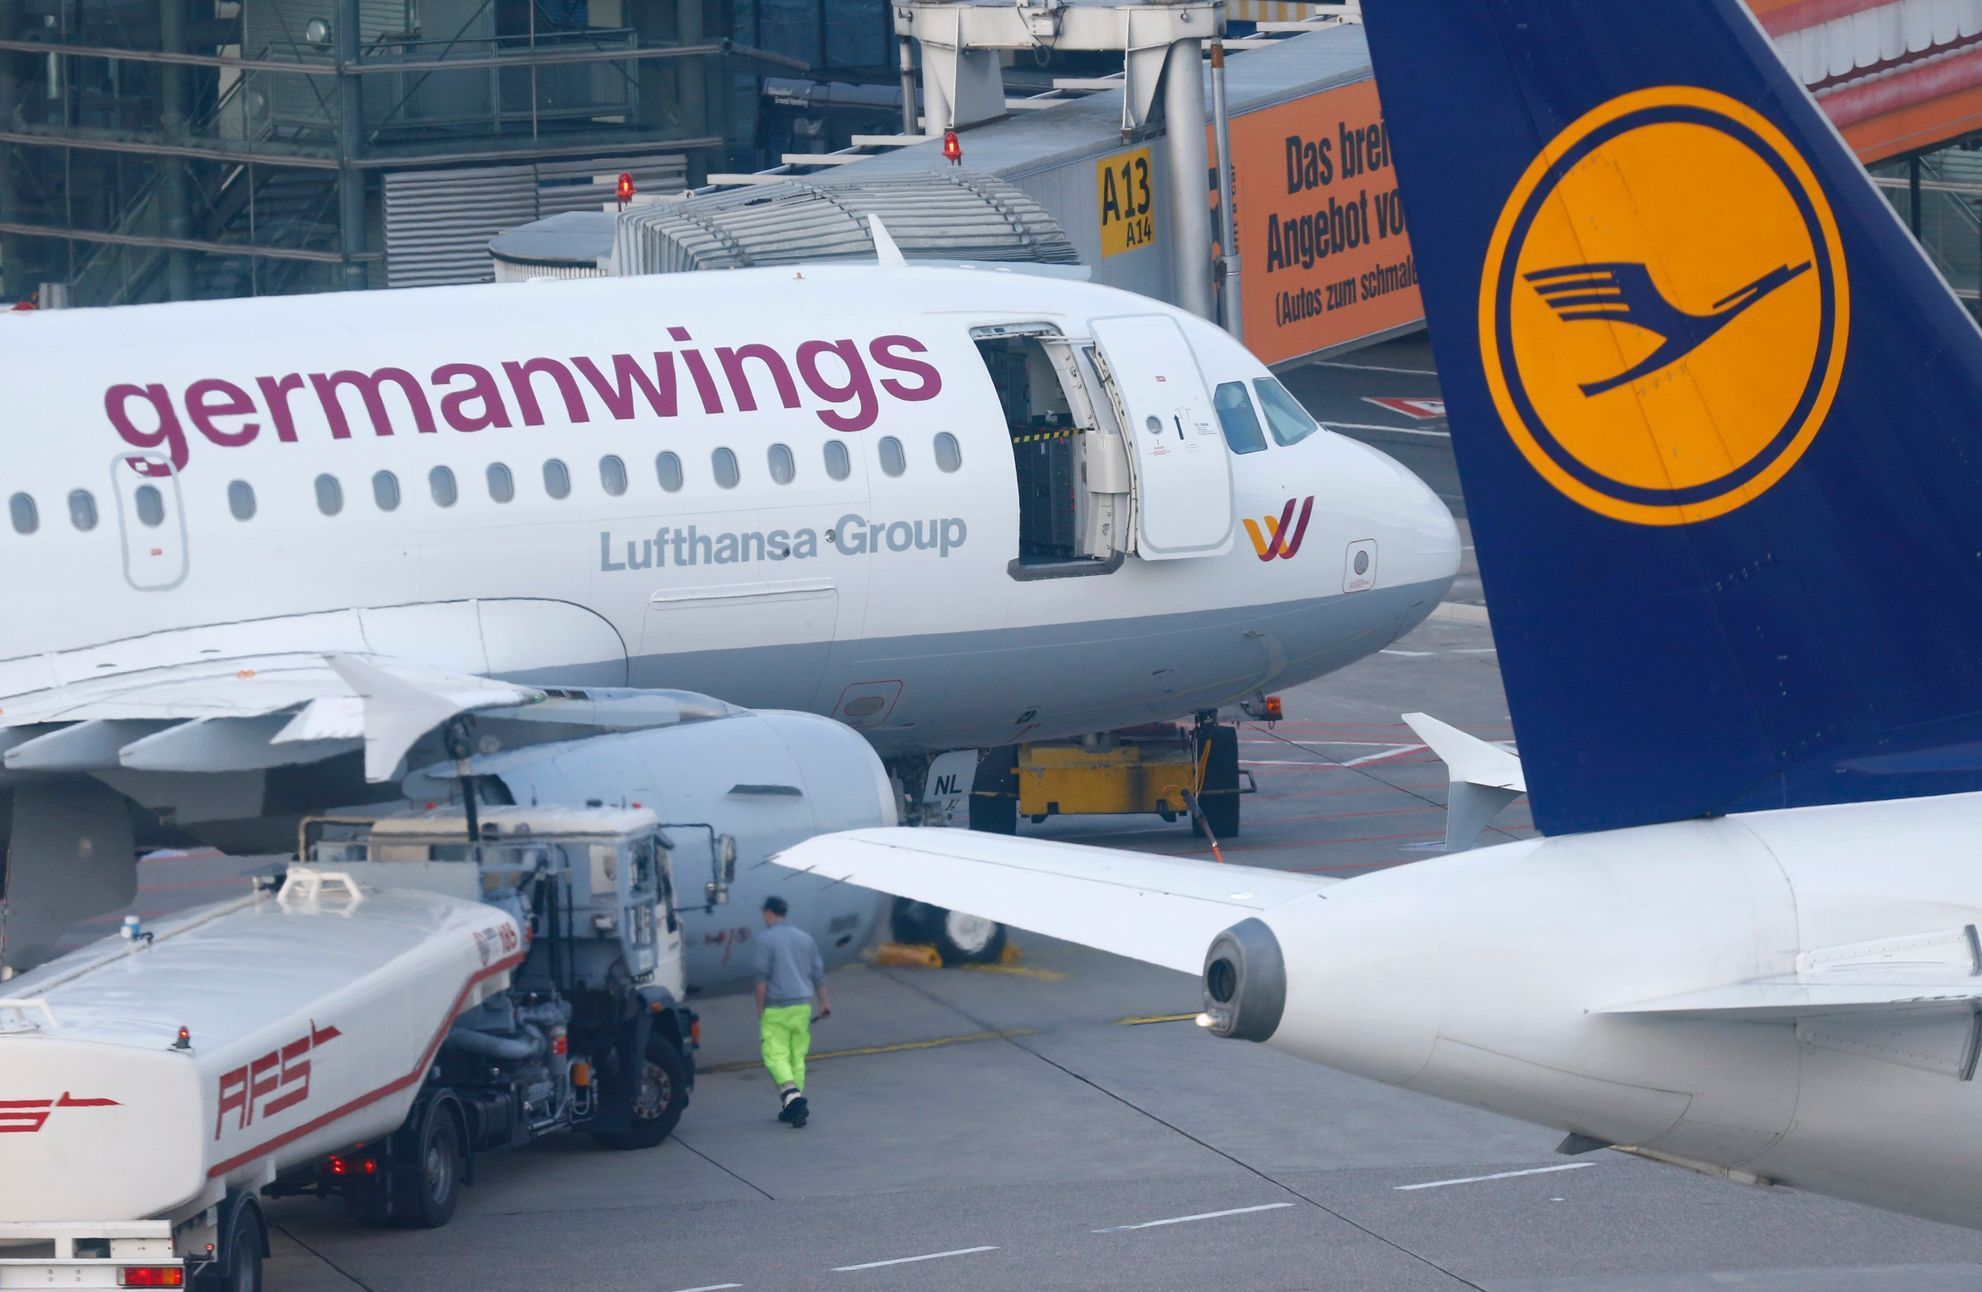 Germanwings - Lufthansa